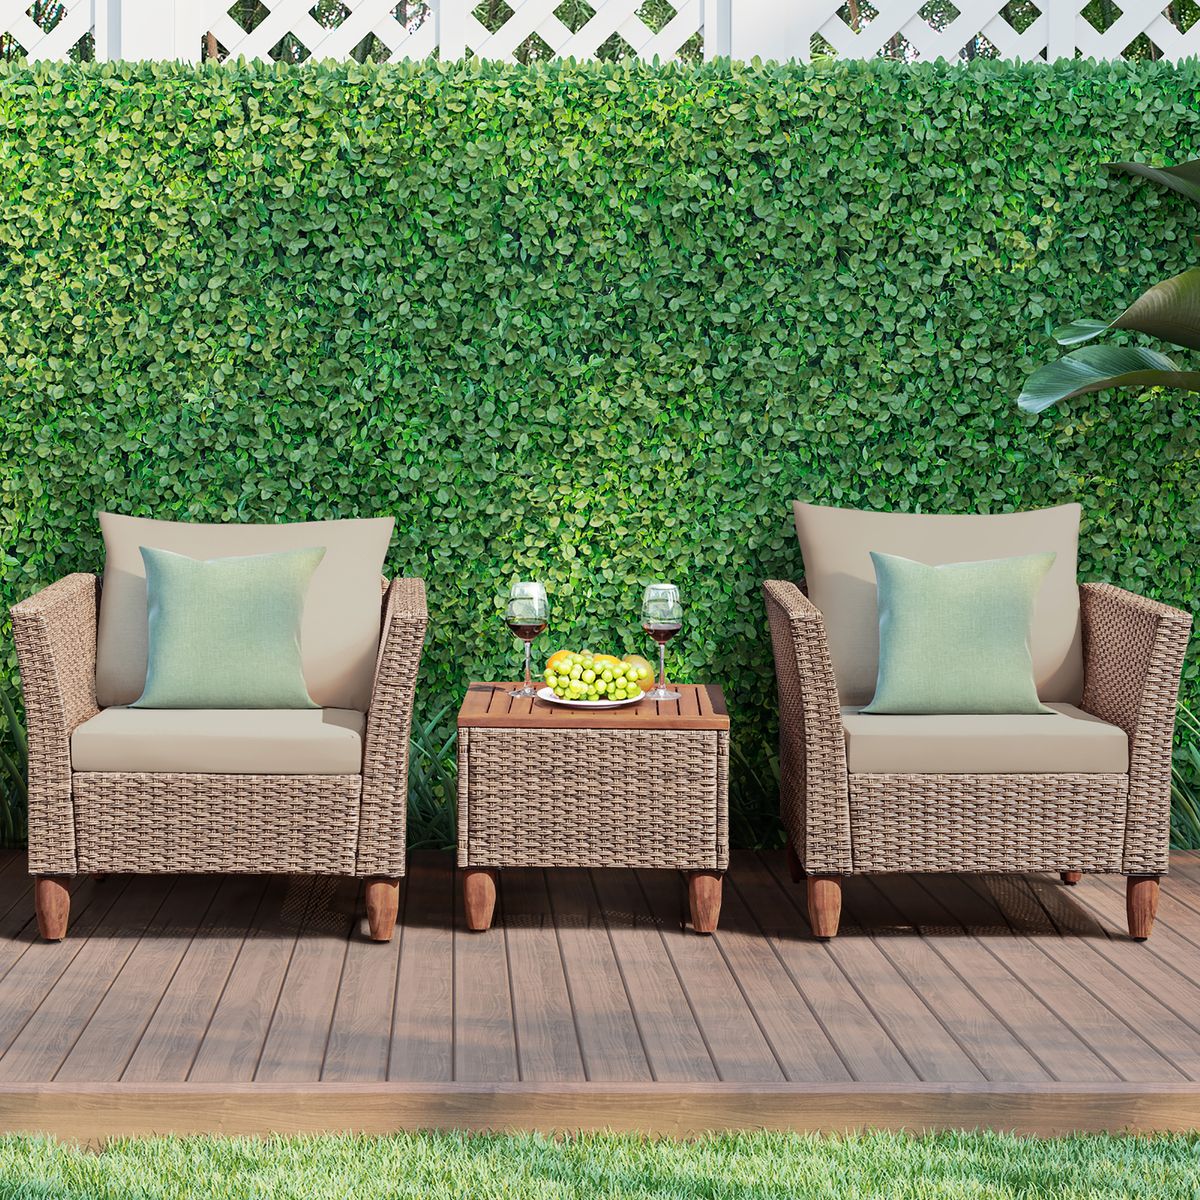 Photos - Garden Furniture Goplus Costway 3-Piece Wicker Rattan Patio Sofa Set - Brown HW66533